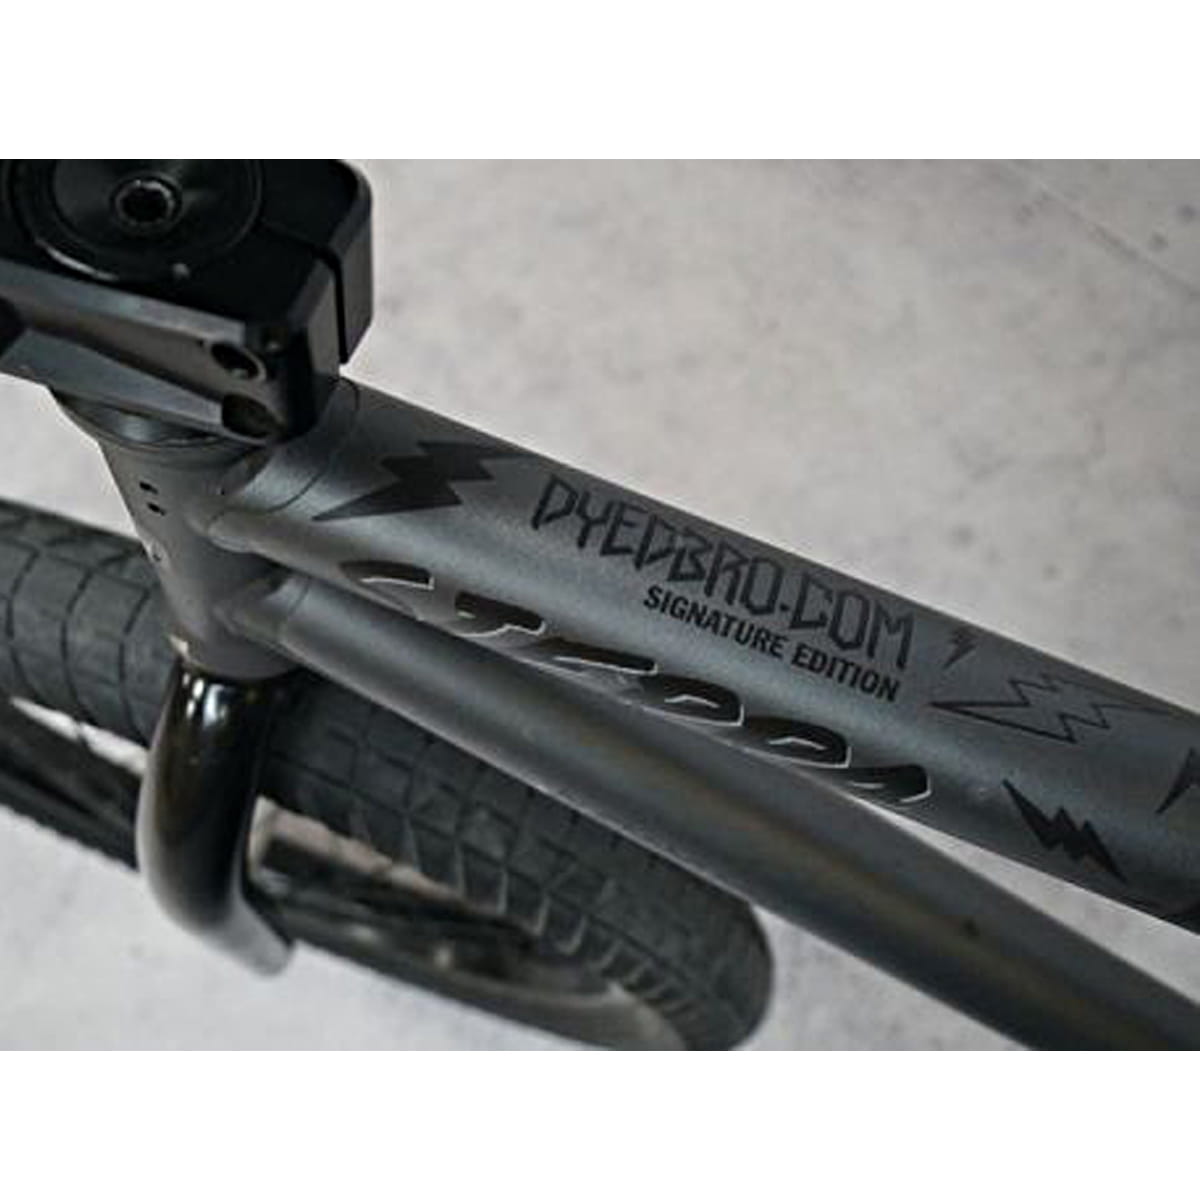 DyedBro Rahmenschutz Kit - Sergio Layos BMX Signature Edition